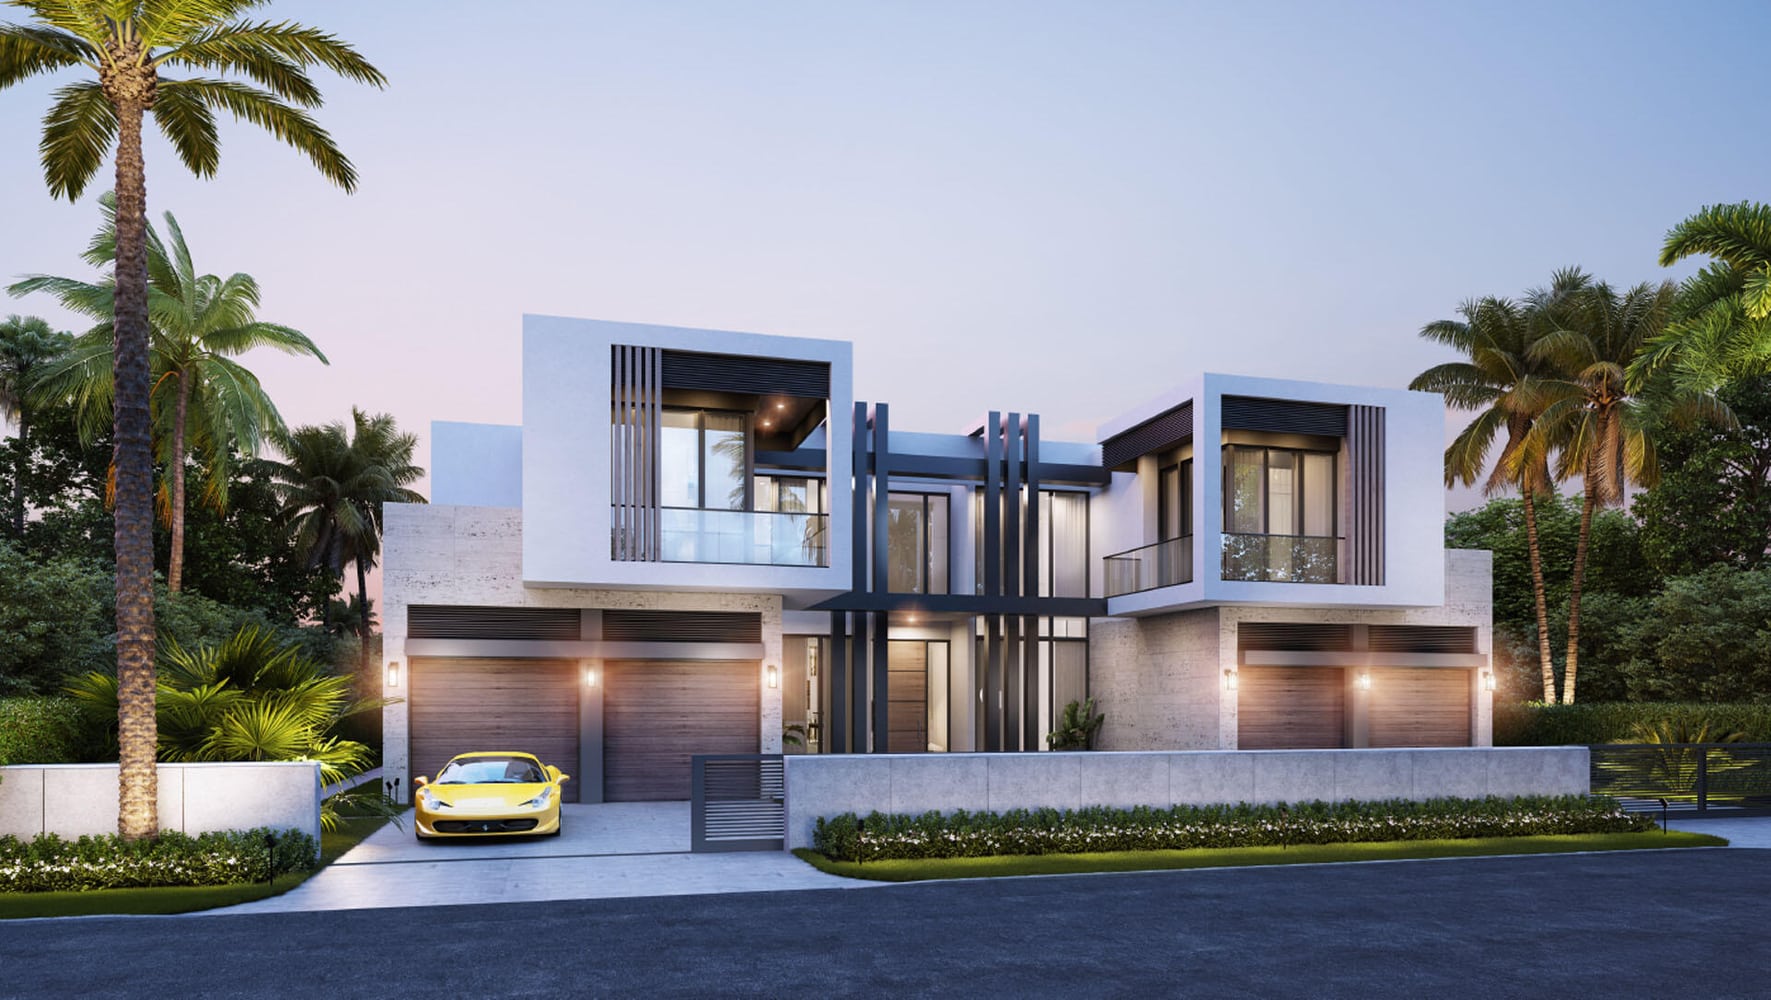 Ravitz Real Estate - Boca Raton, FL, US, real estate agent for buyers